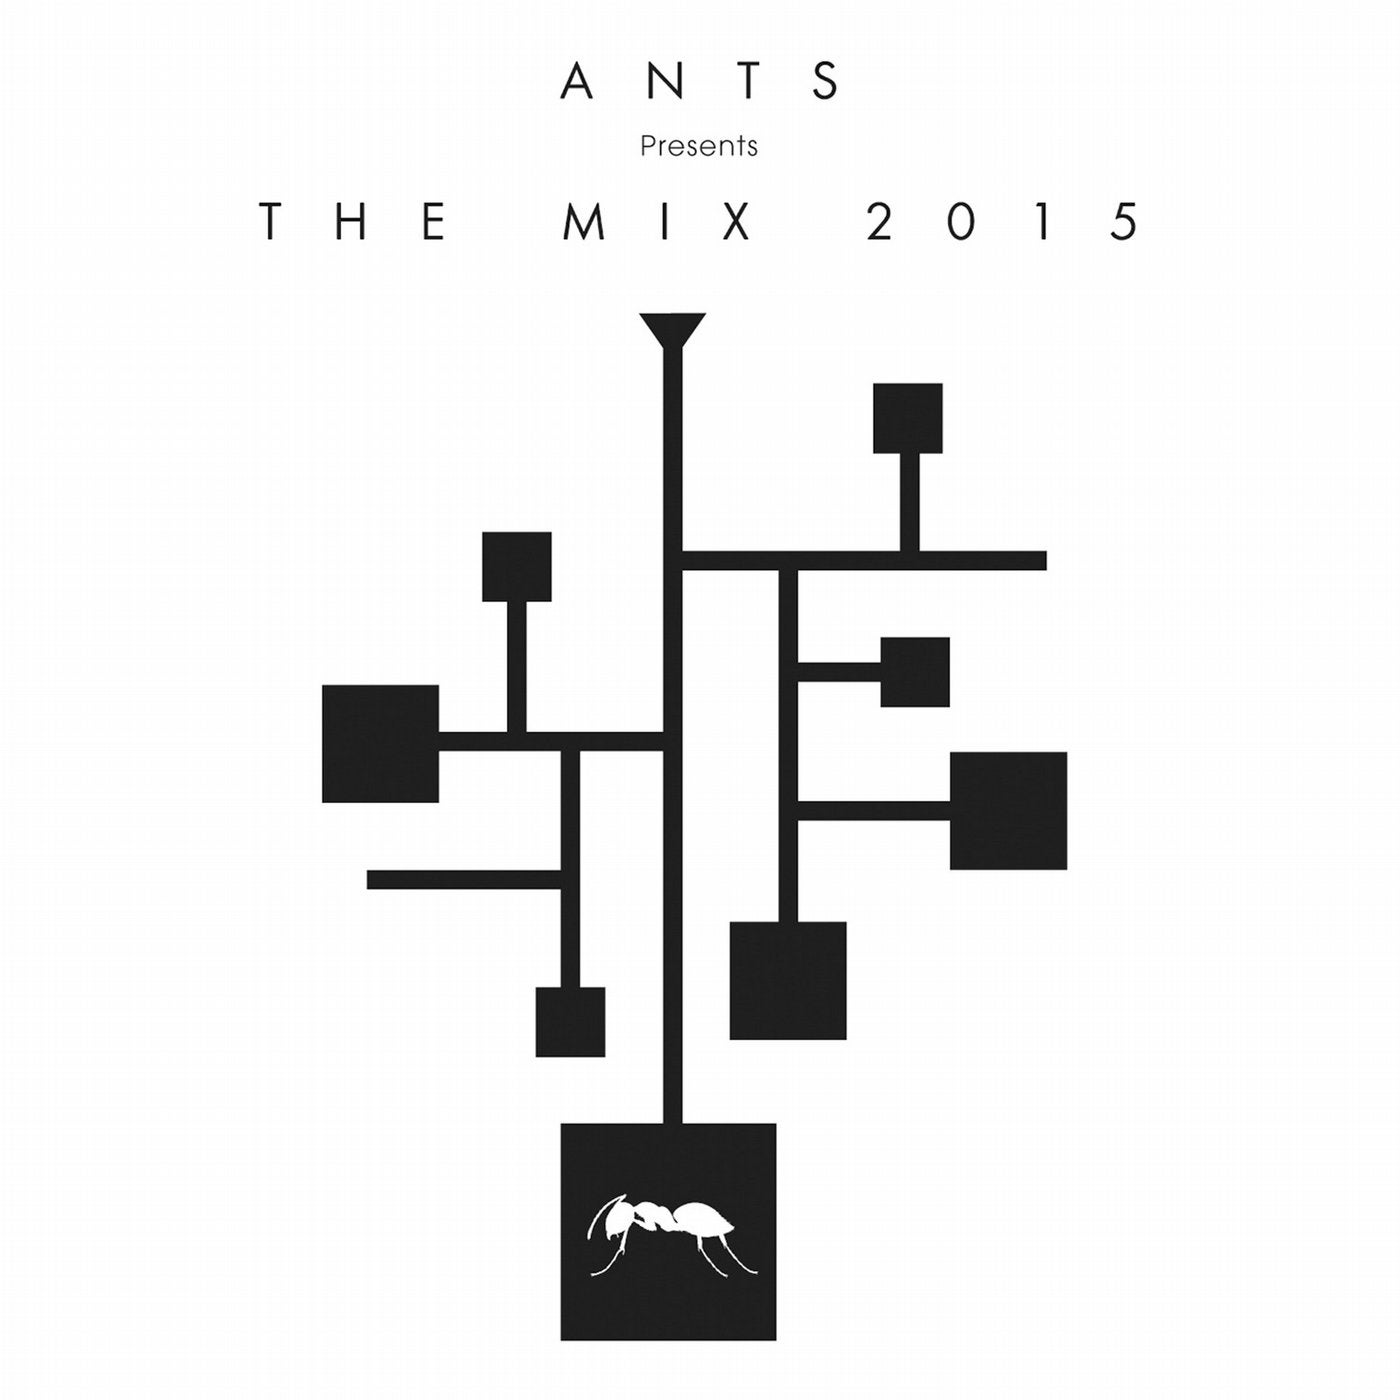 ANTS presents The Mix 2015